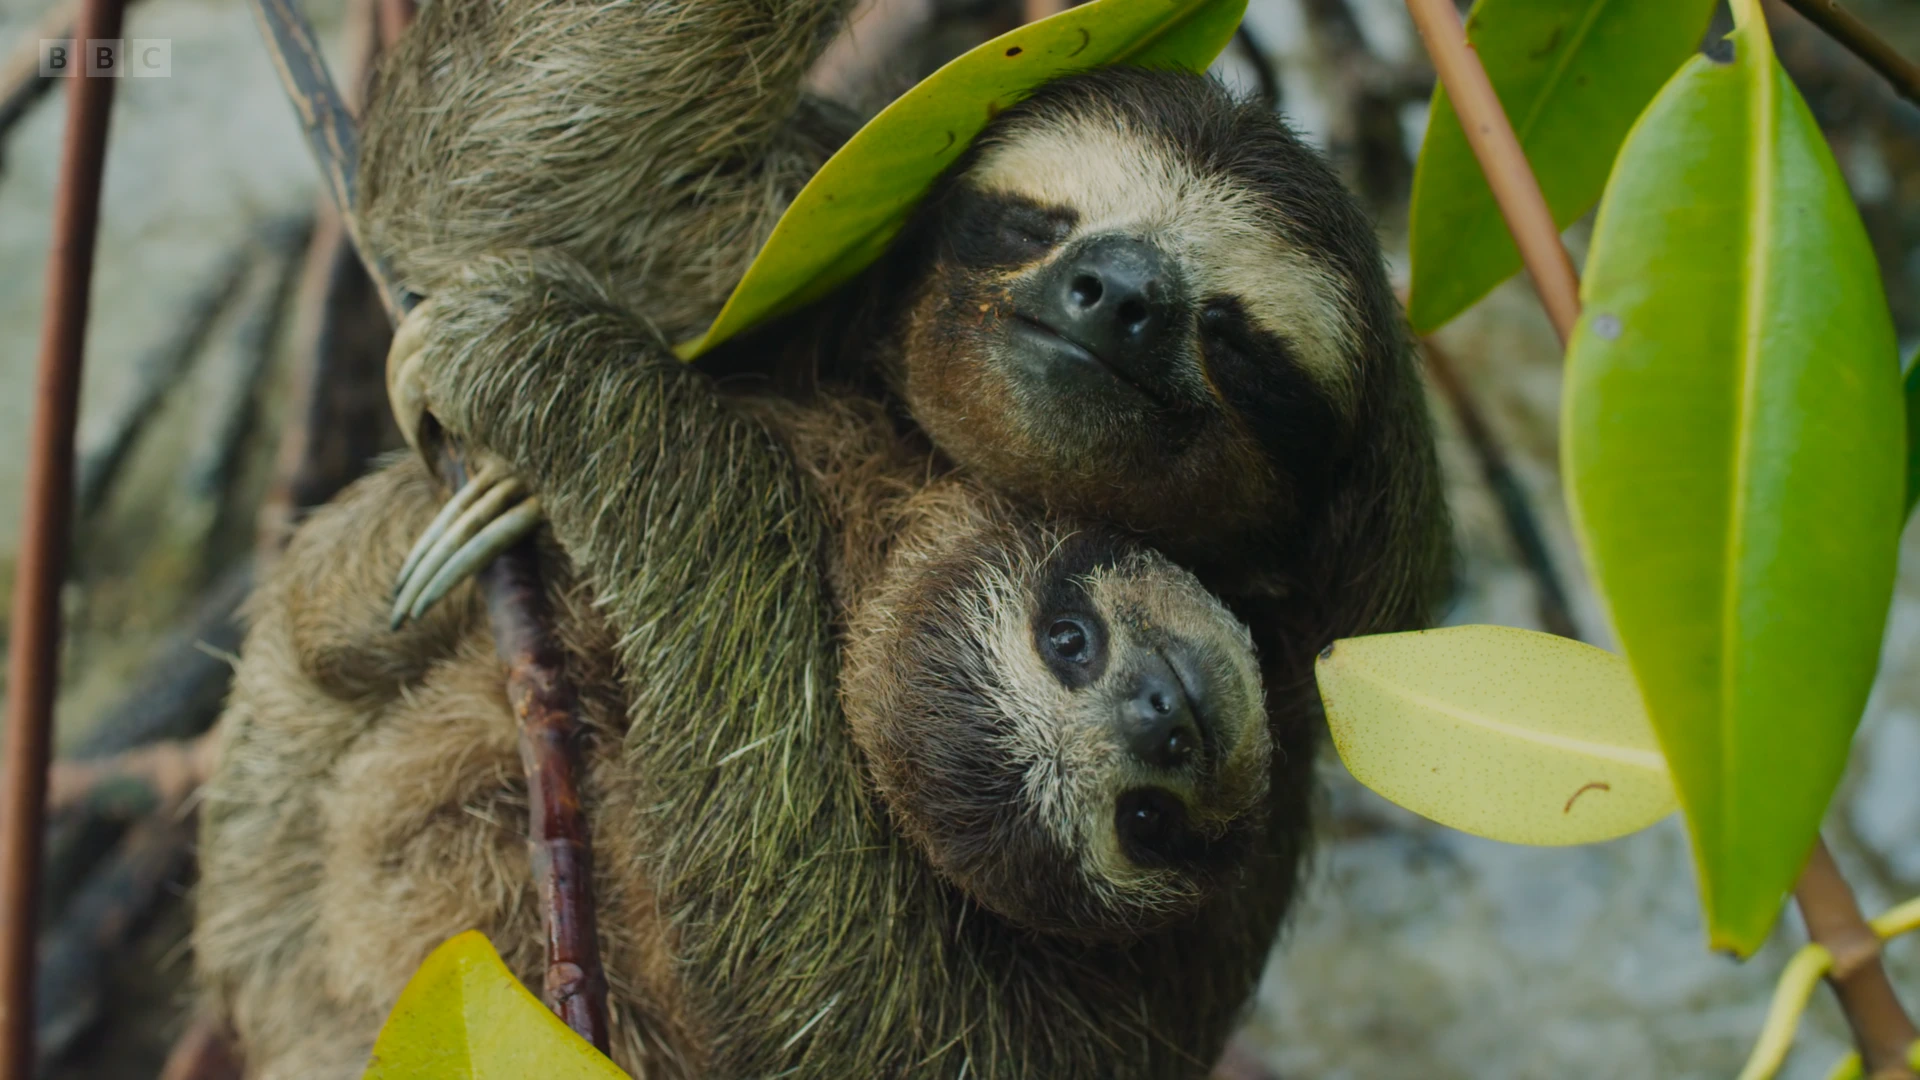 Pygmy three-toed sloth (Bradypus pygmaeus) as shown in Planet Earth II - Islands